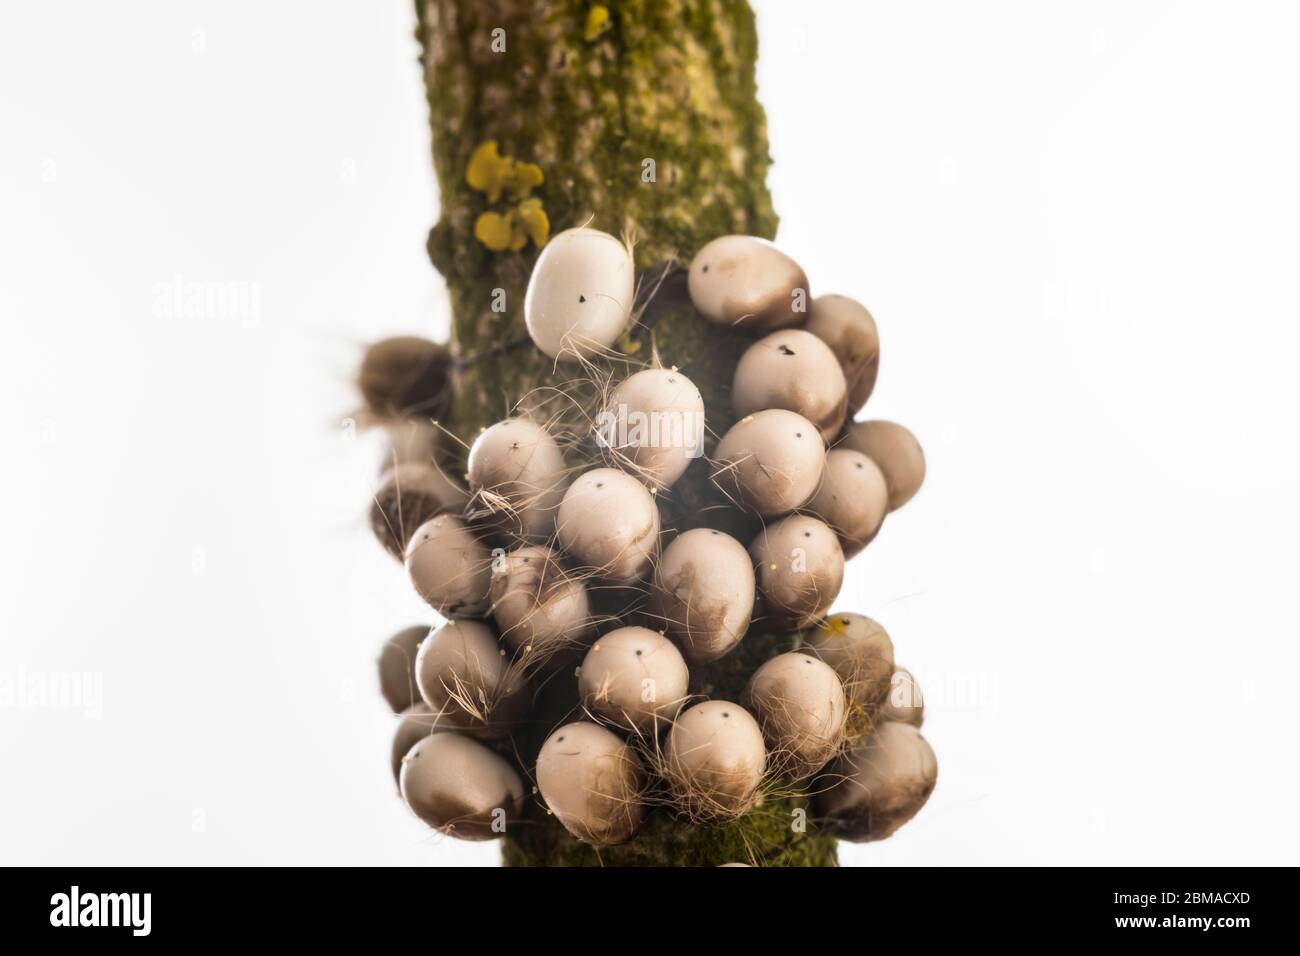 Kleines Nachtpfauenauge - Eier, Saturnia pavonia, small emperor moth - eggs Stock Photo